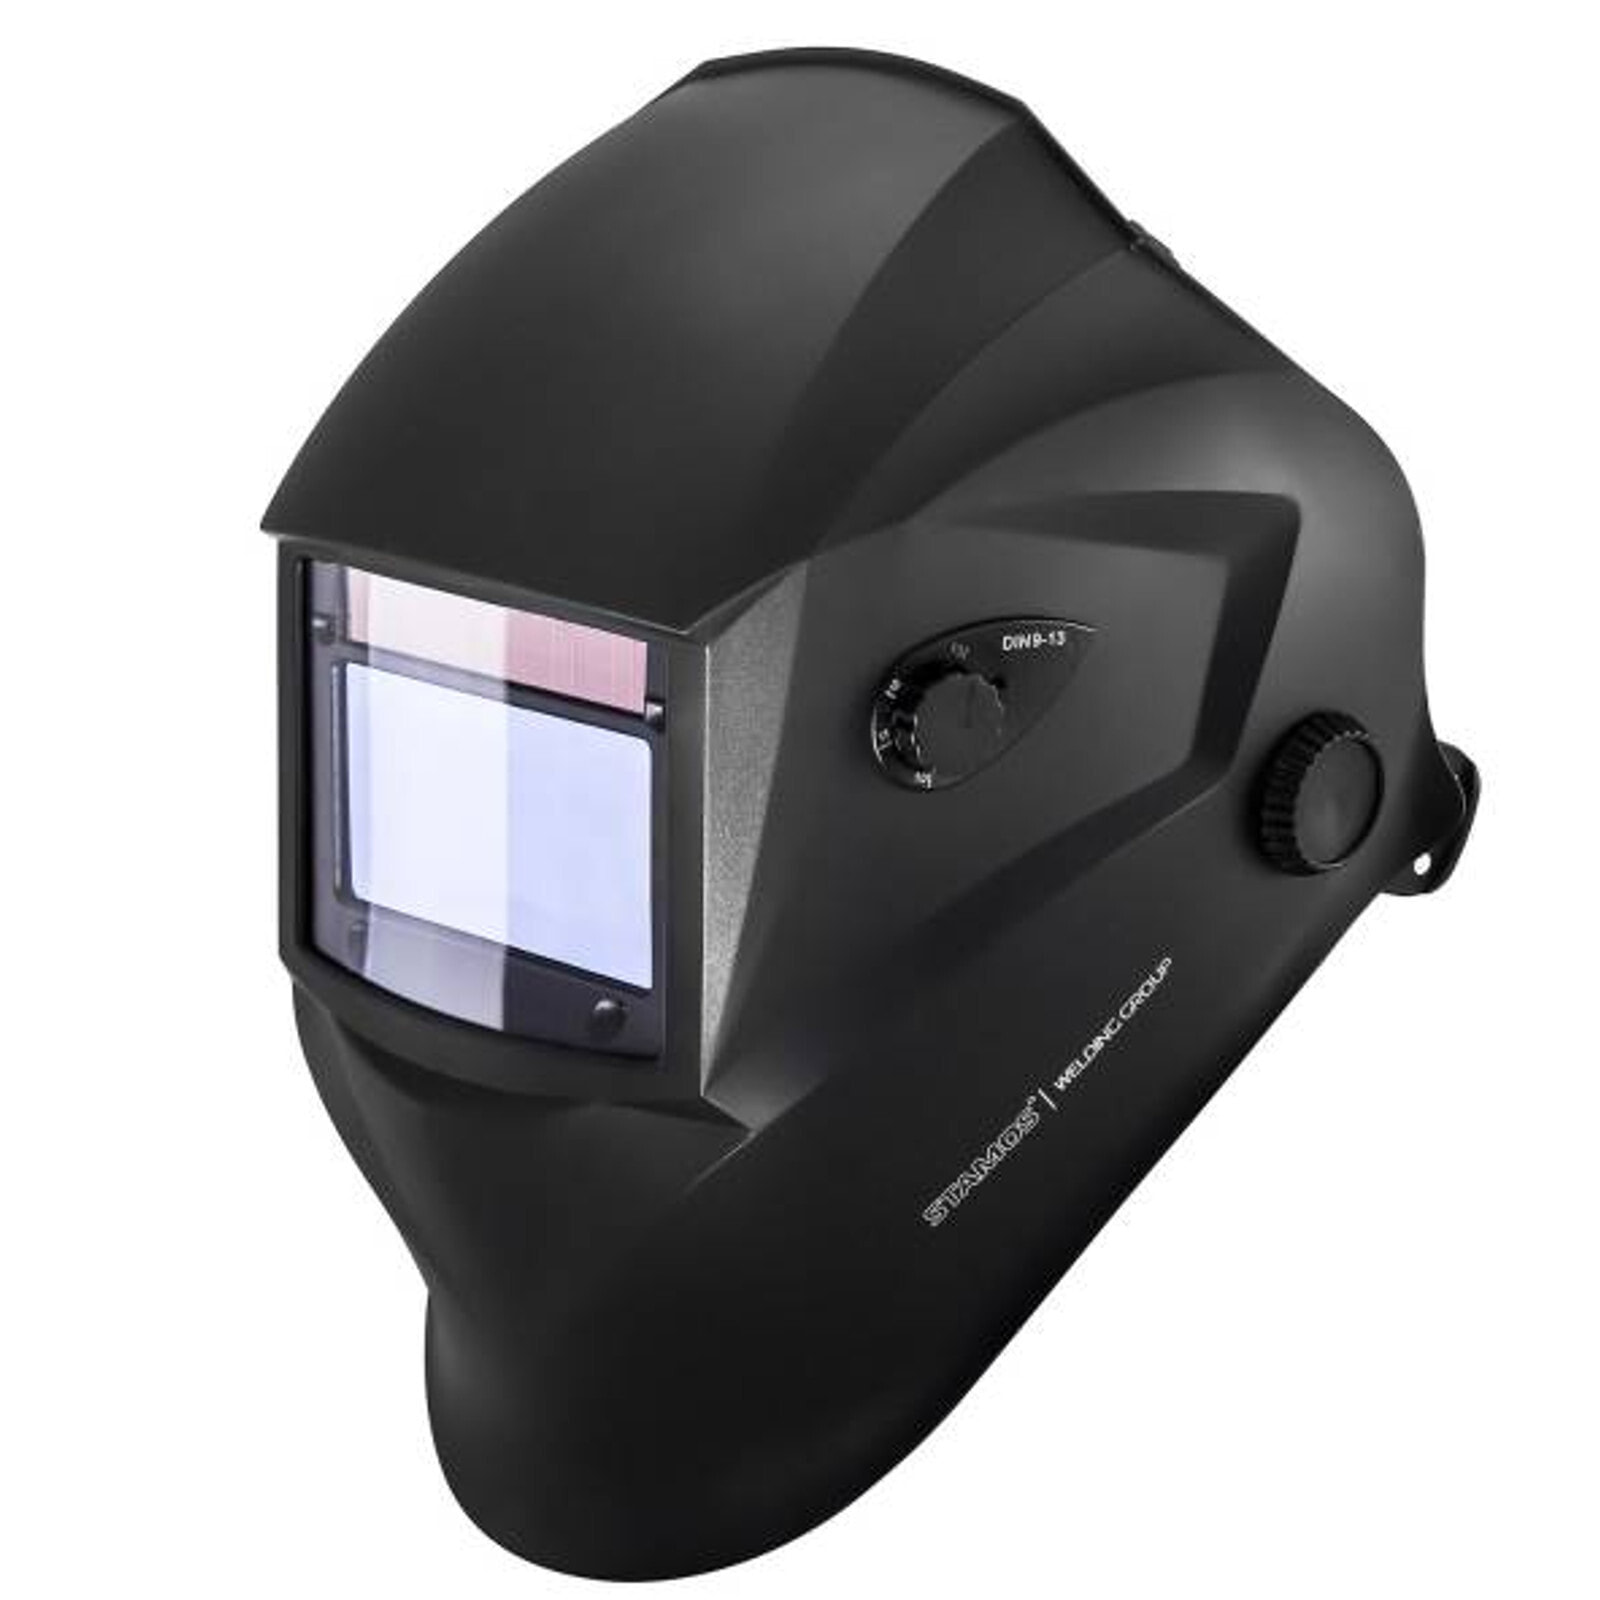 Automatic self-darkening welding helmet mask with grind BLASTER function